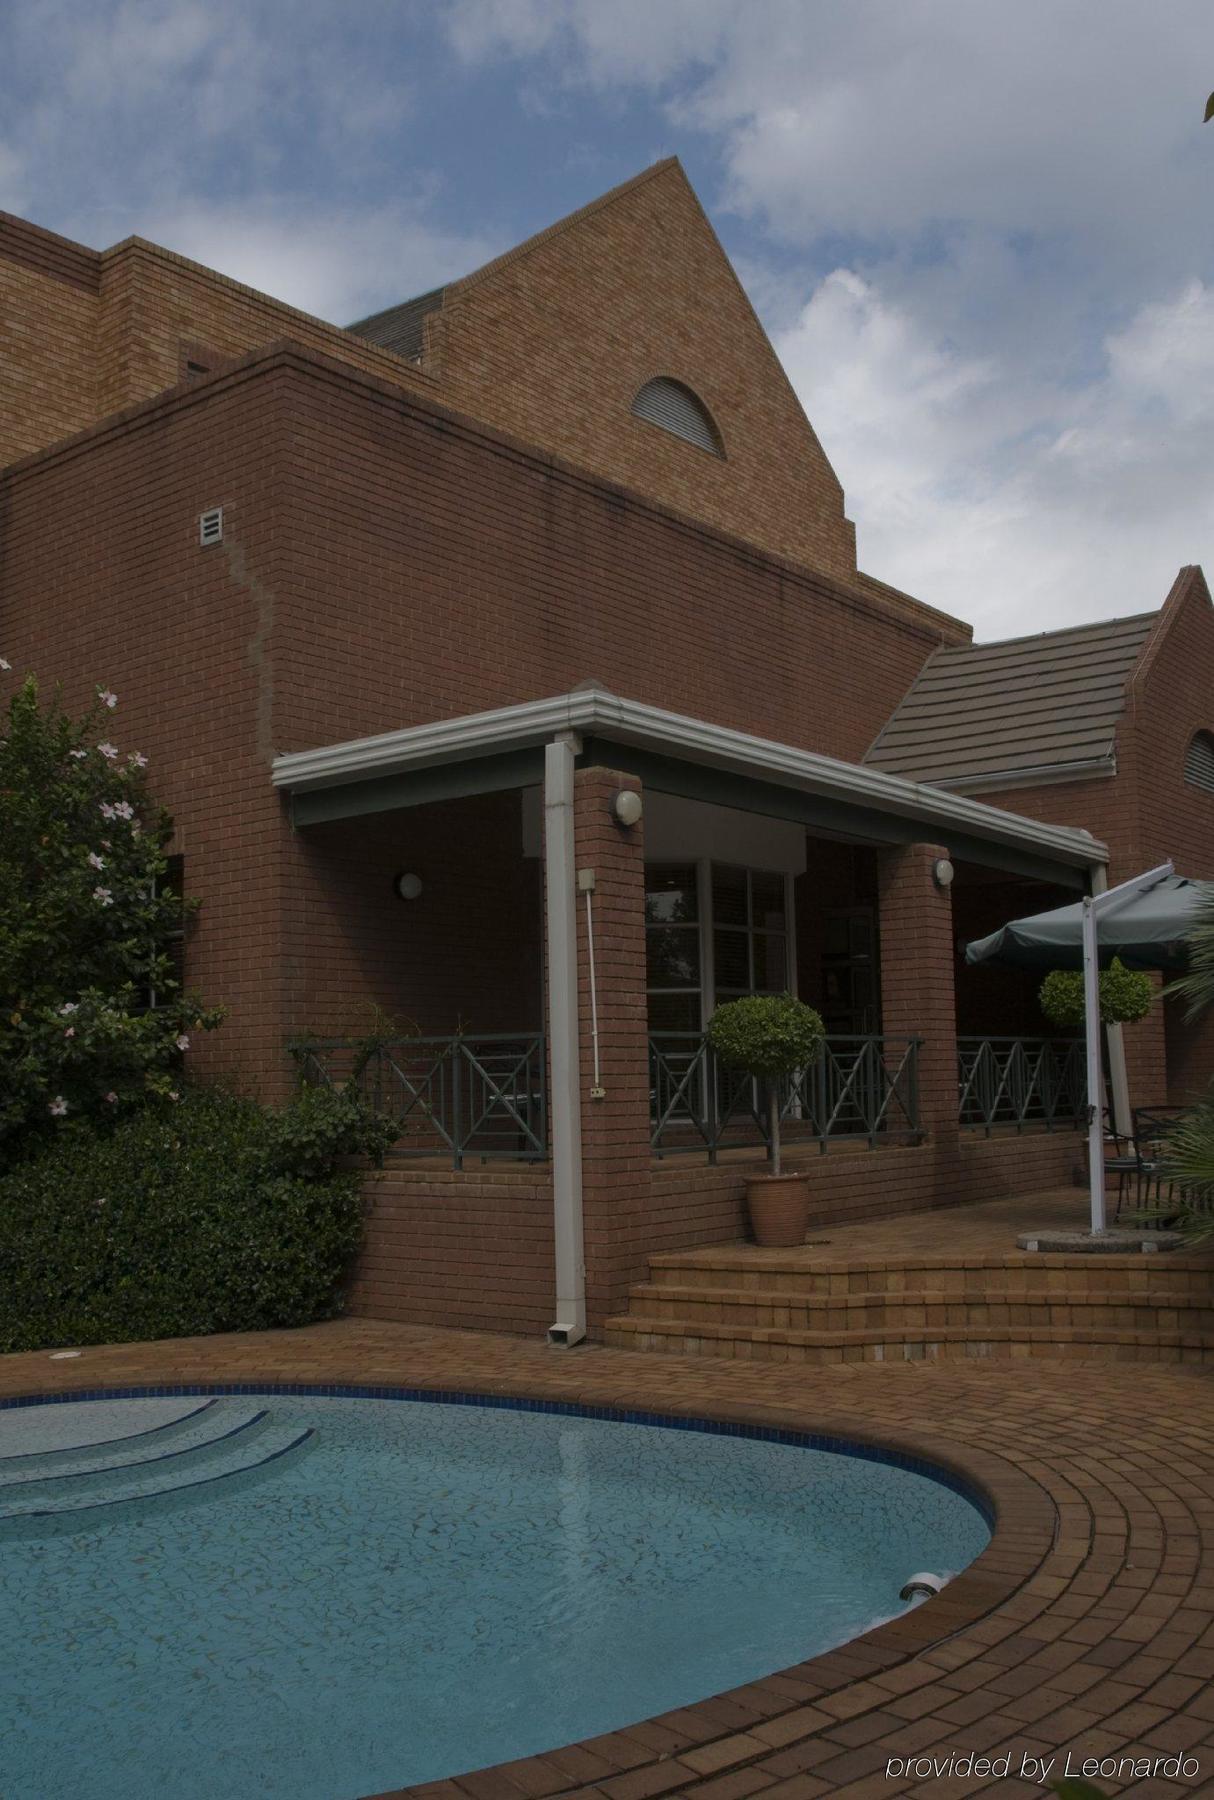 Road Lodge Sandton Johannesburg Exterior foto